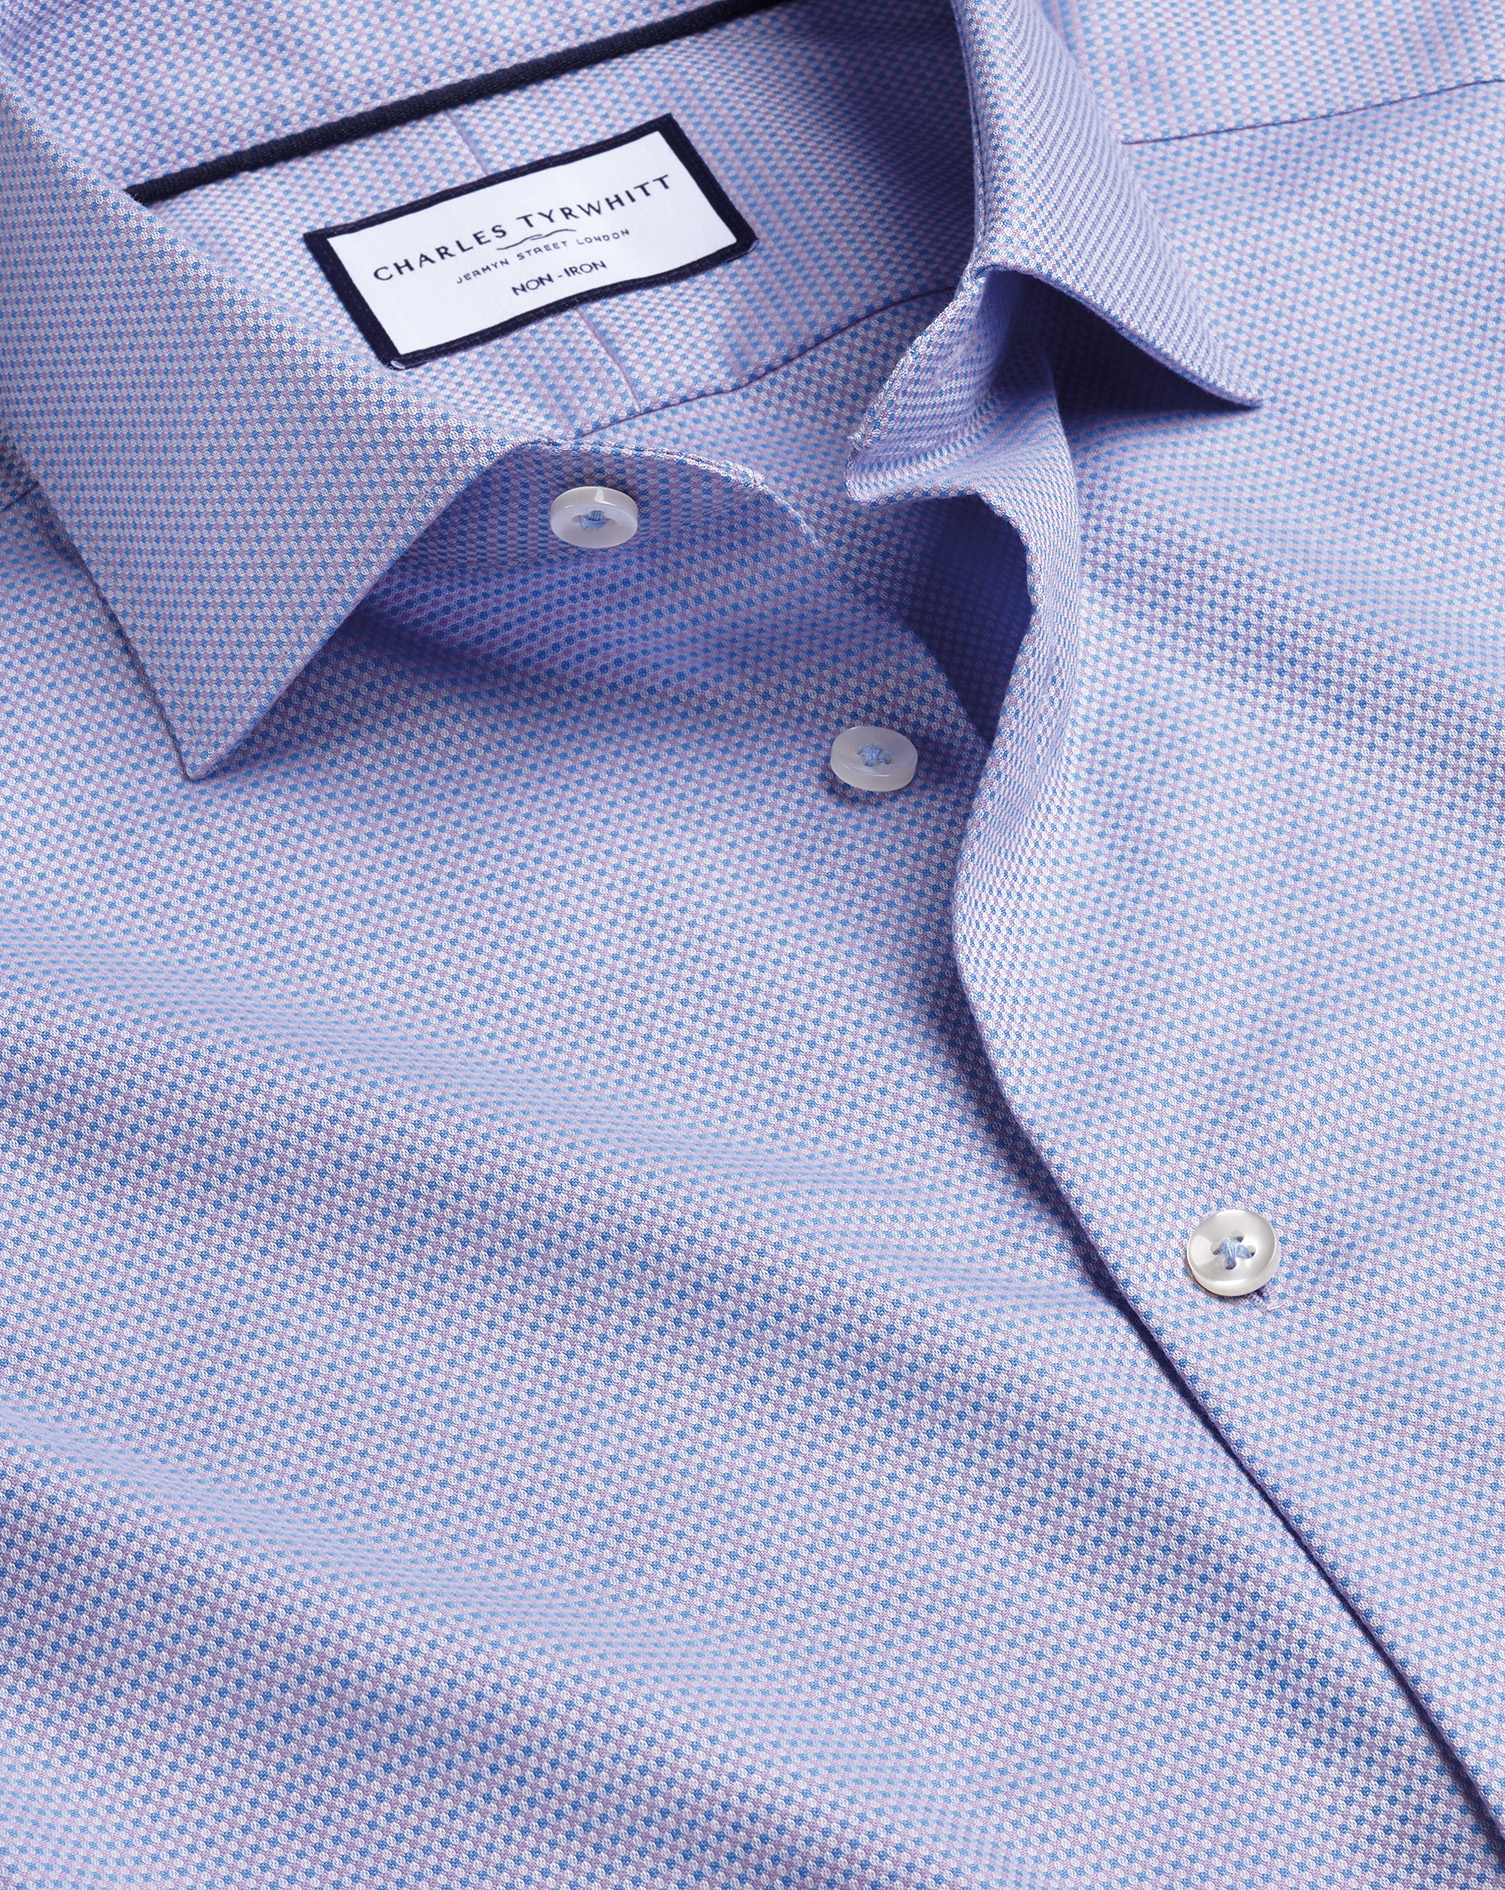 Men's Charles Tyrwhitt Non-Iron Stretch Texture Square Dress Shirt - Lilac Purple Single Cuff Size 1